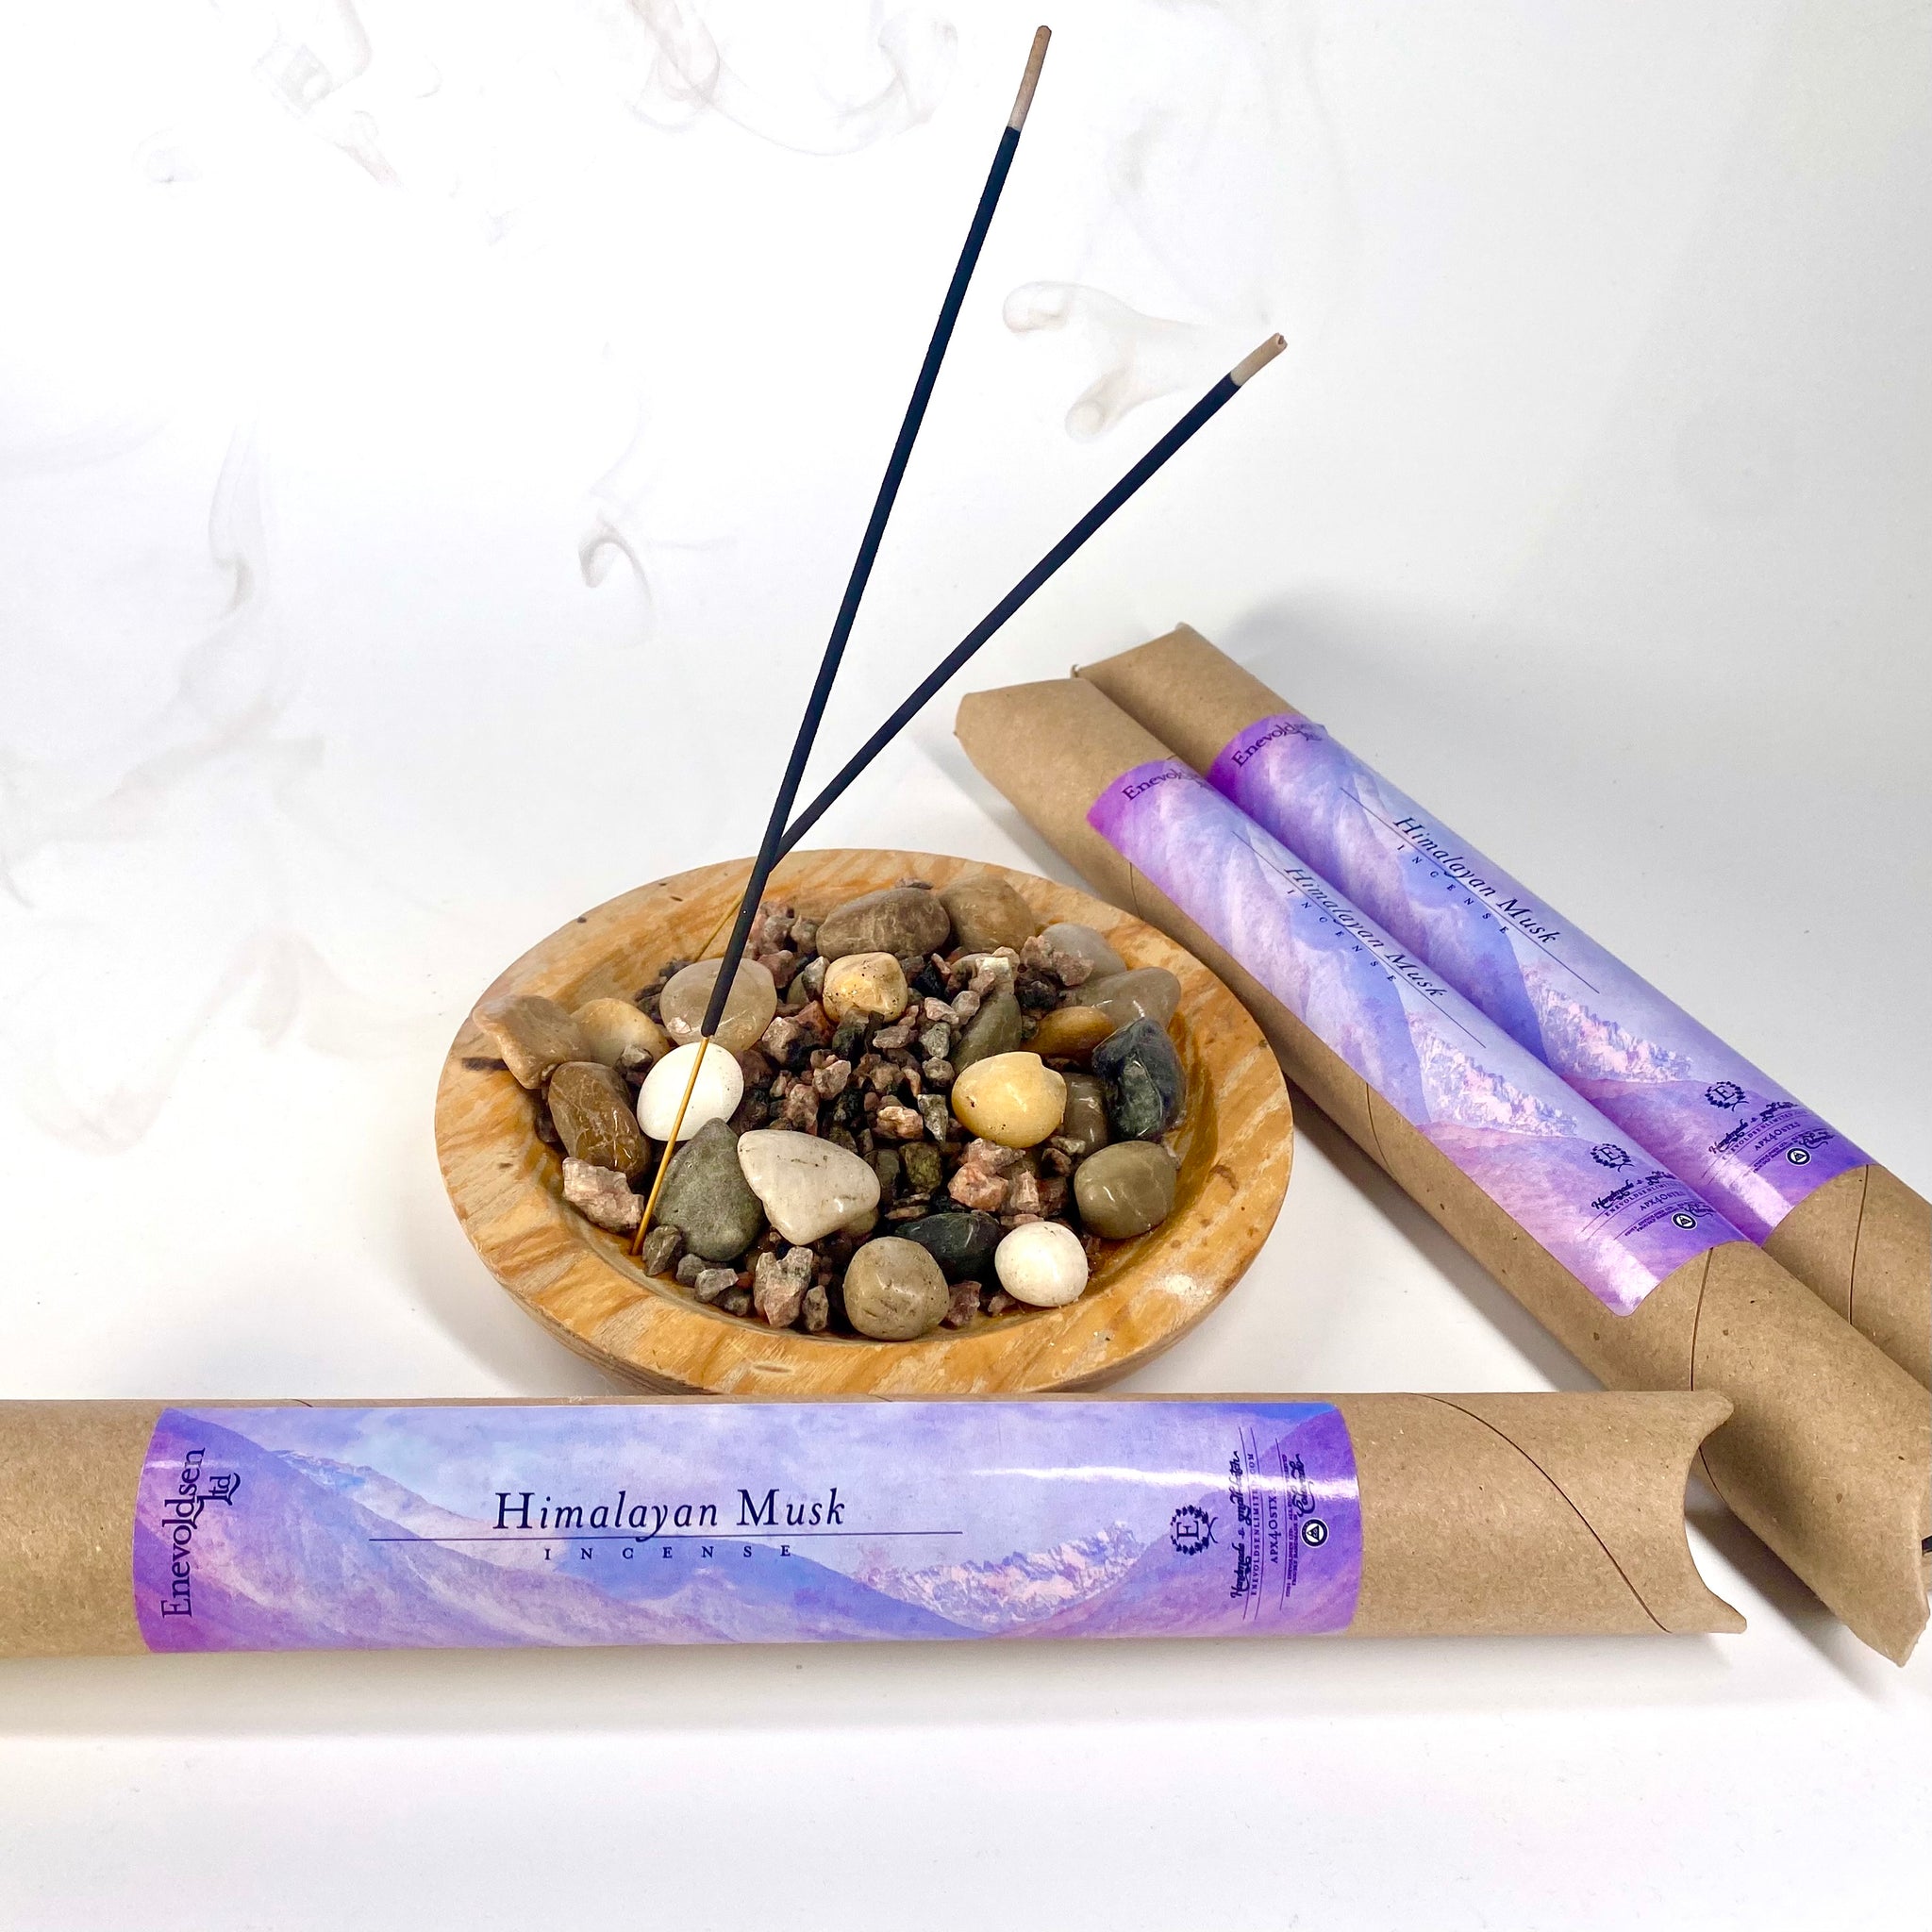 Himalayan Musk Handmade Charcoal Incense - Enevoldsen Limited